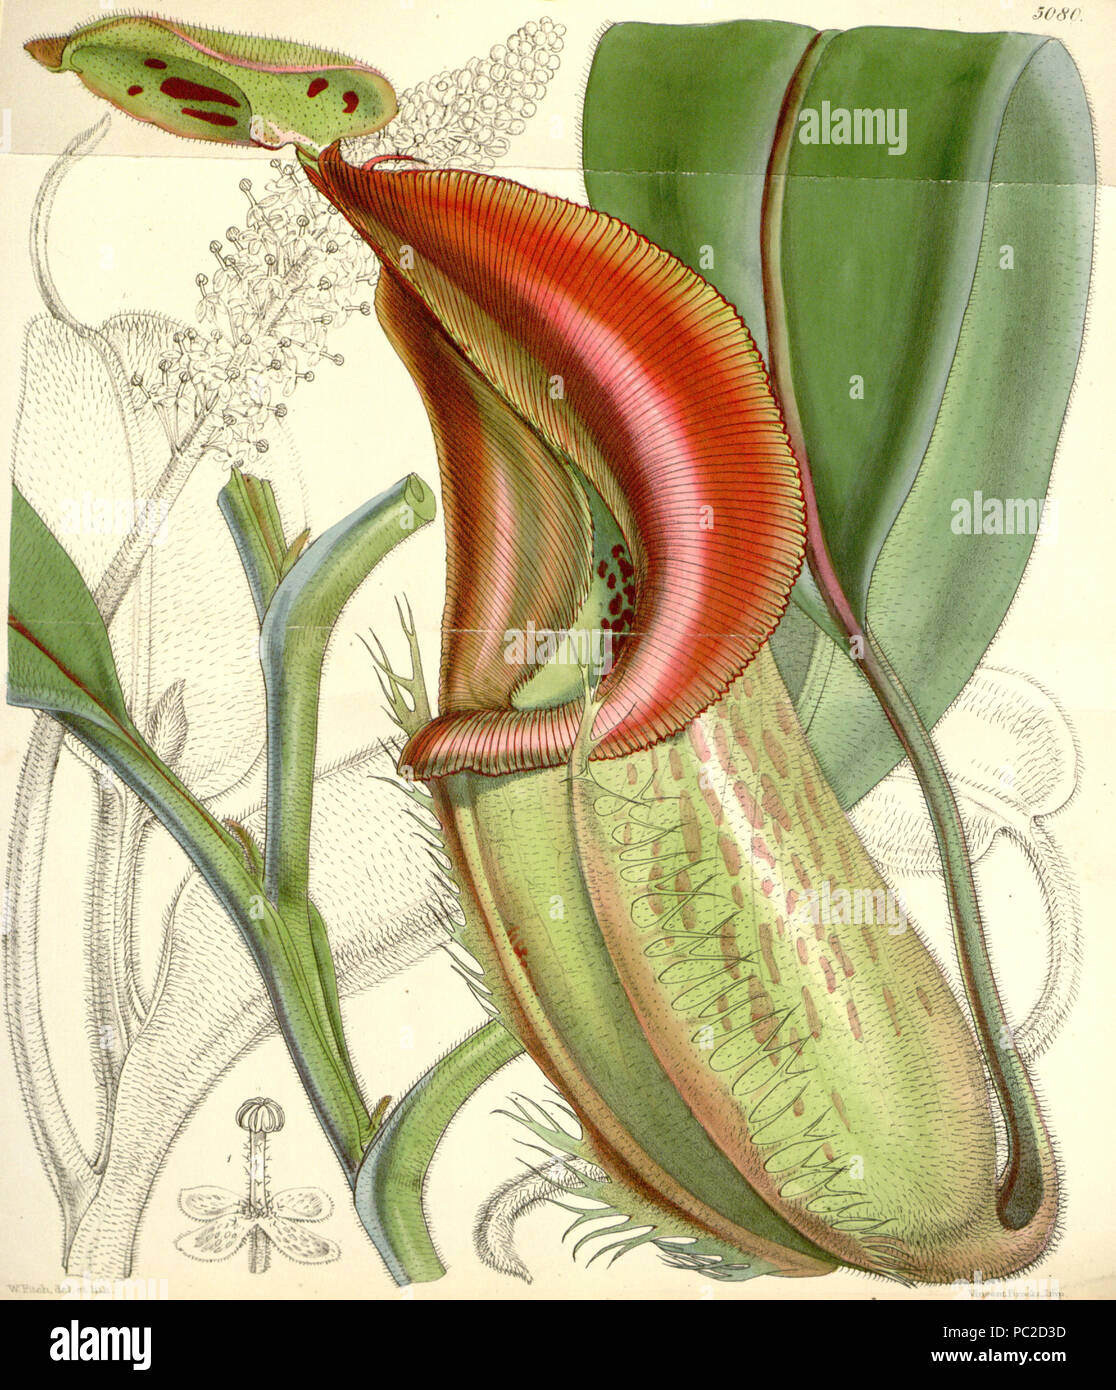 440 Nepenthes veitchii - Curtis’s Botanical Magazine (1858) Stock Photo